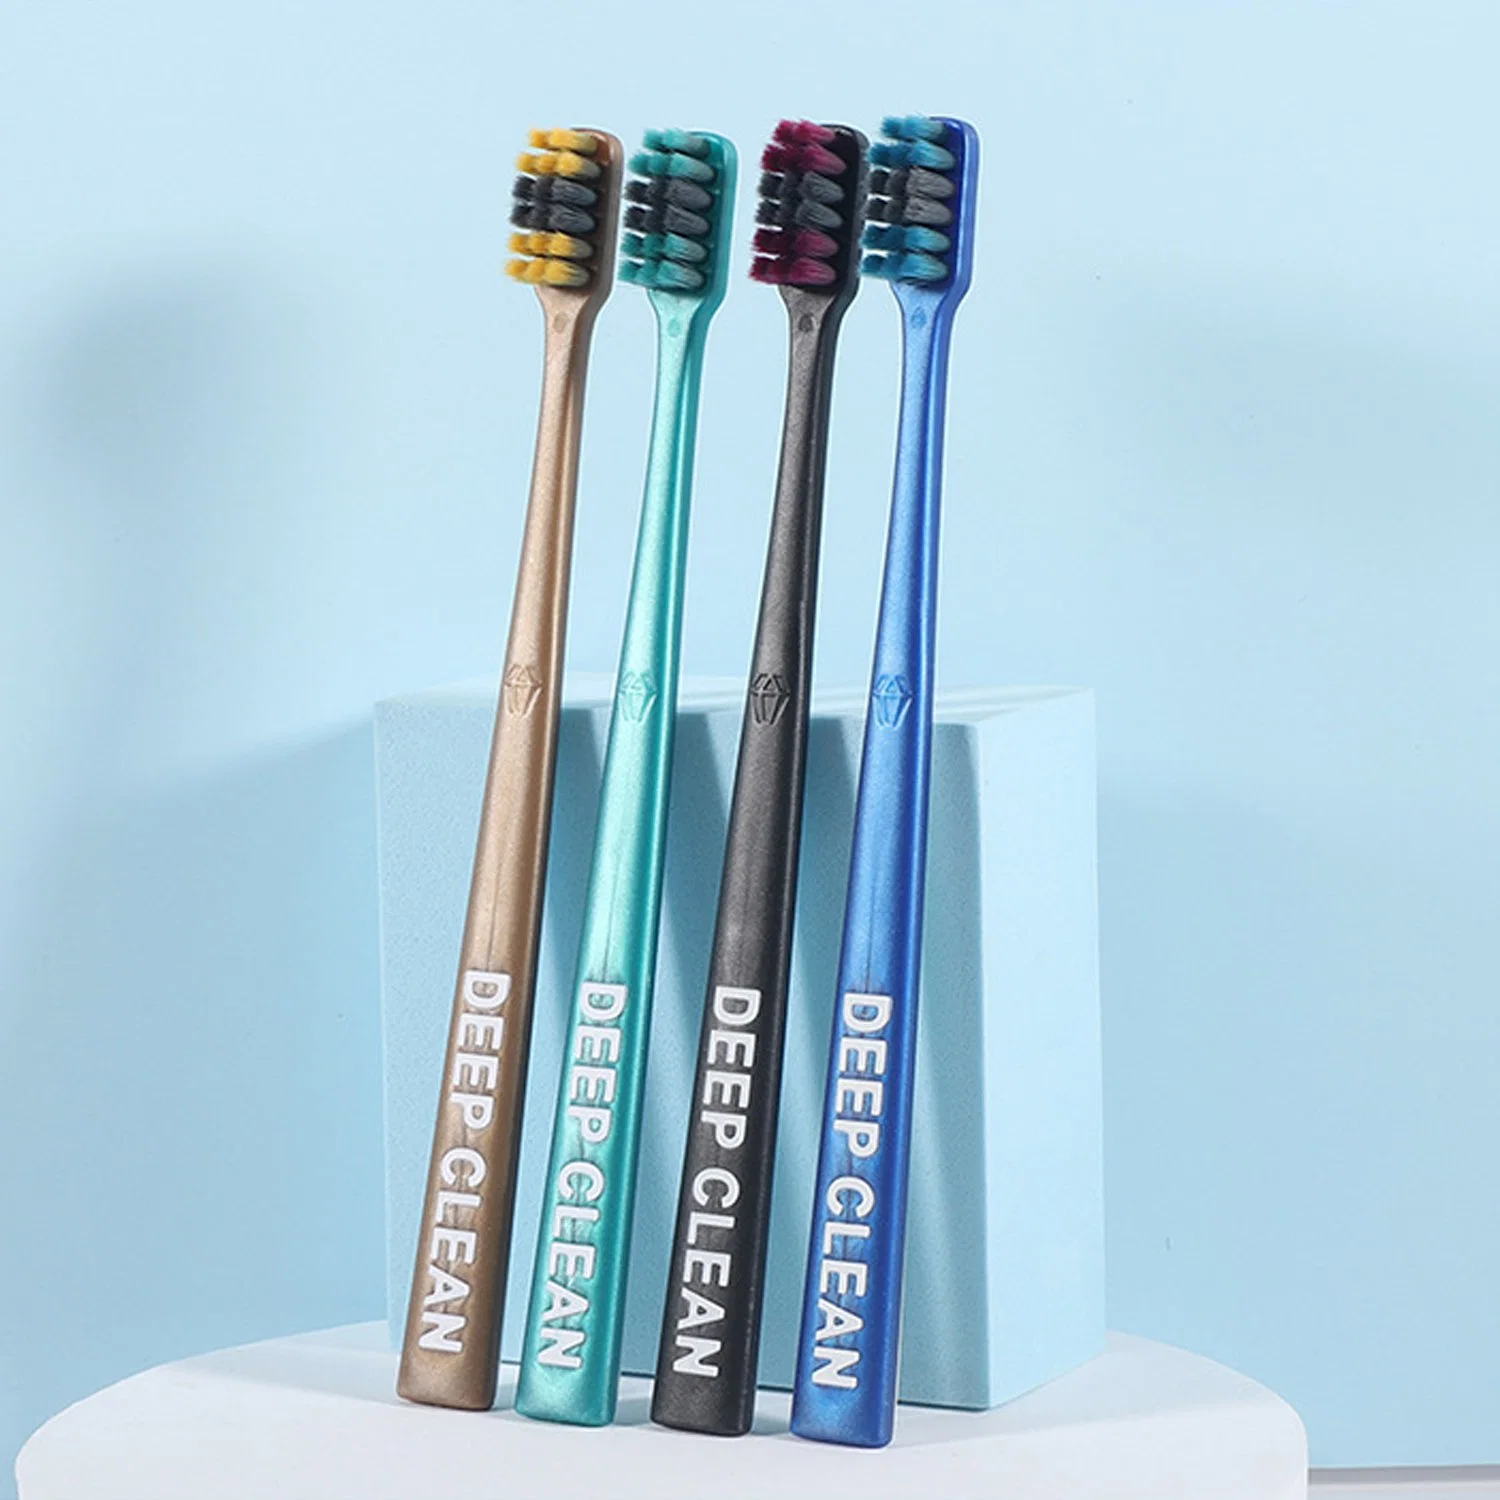 Free Sample Ultra Soft Bristle Small Brush Head Adult Toothbrush